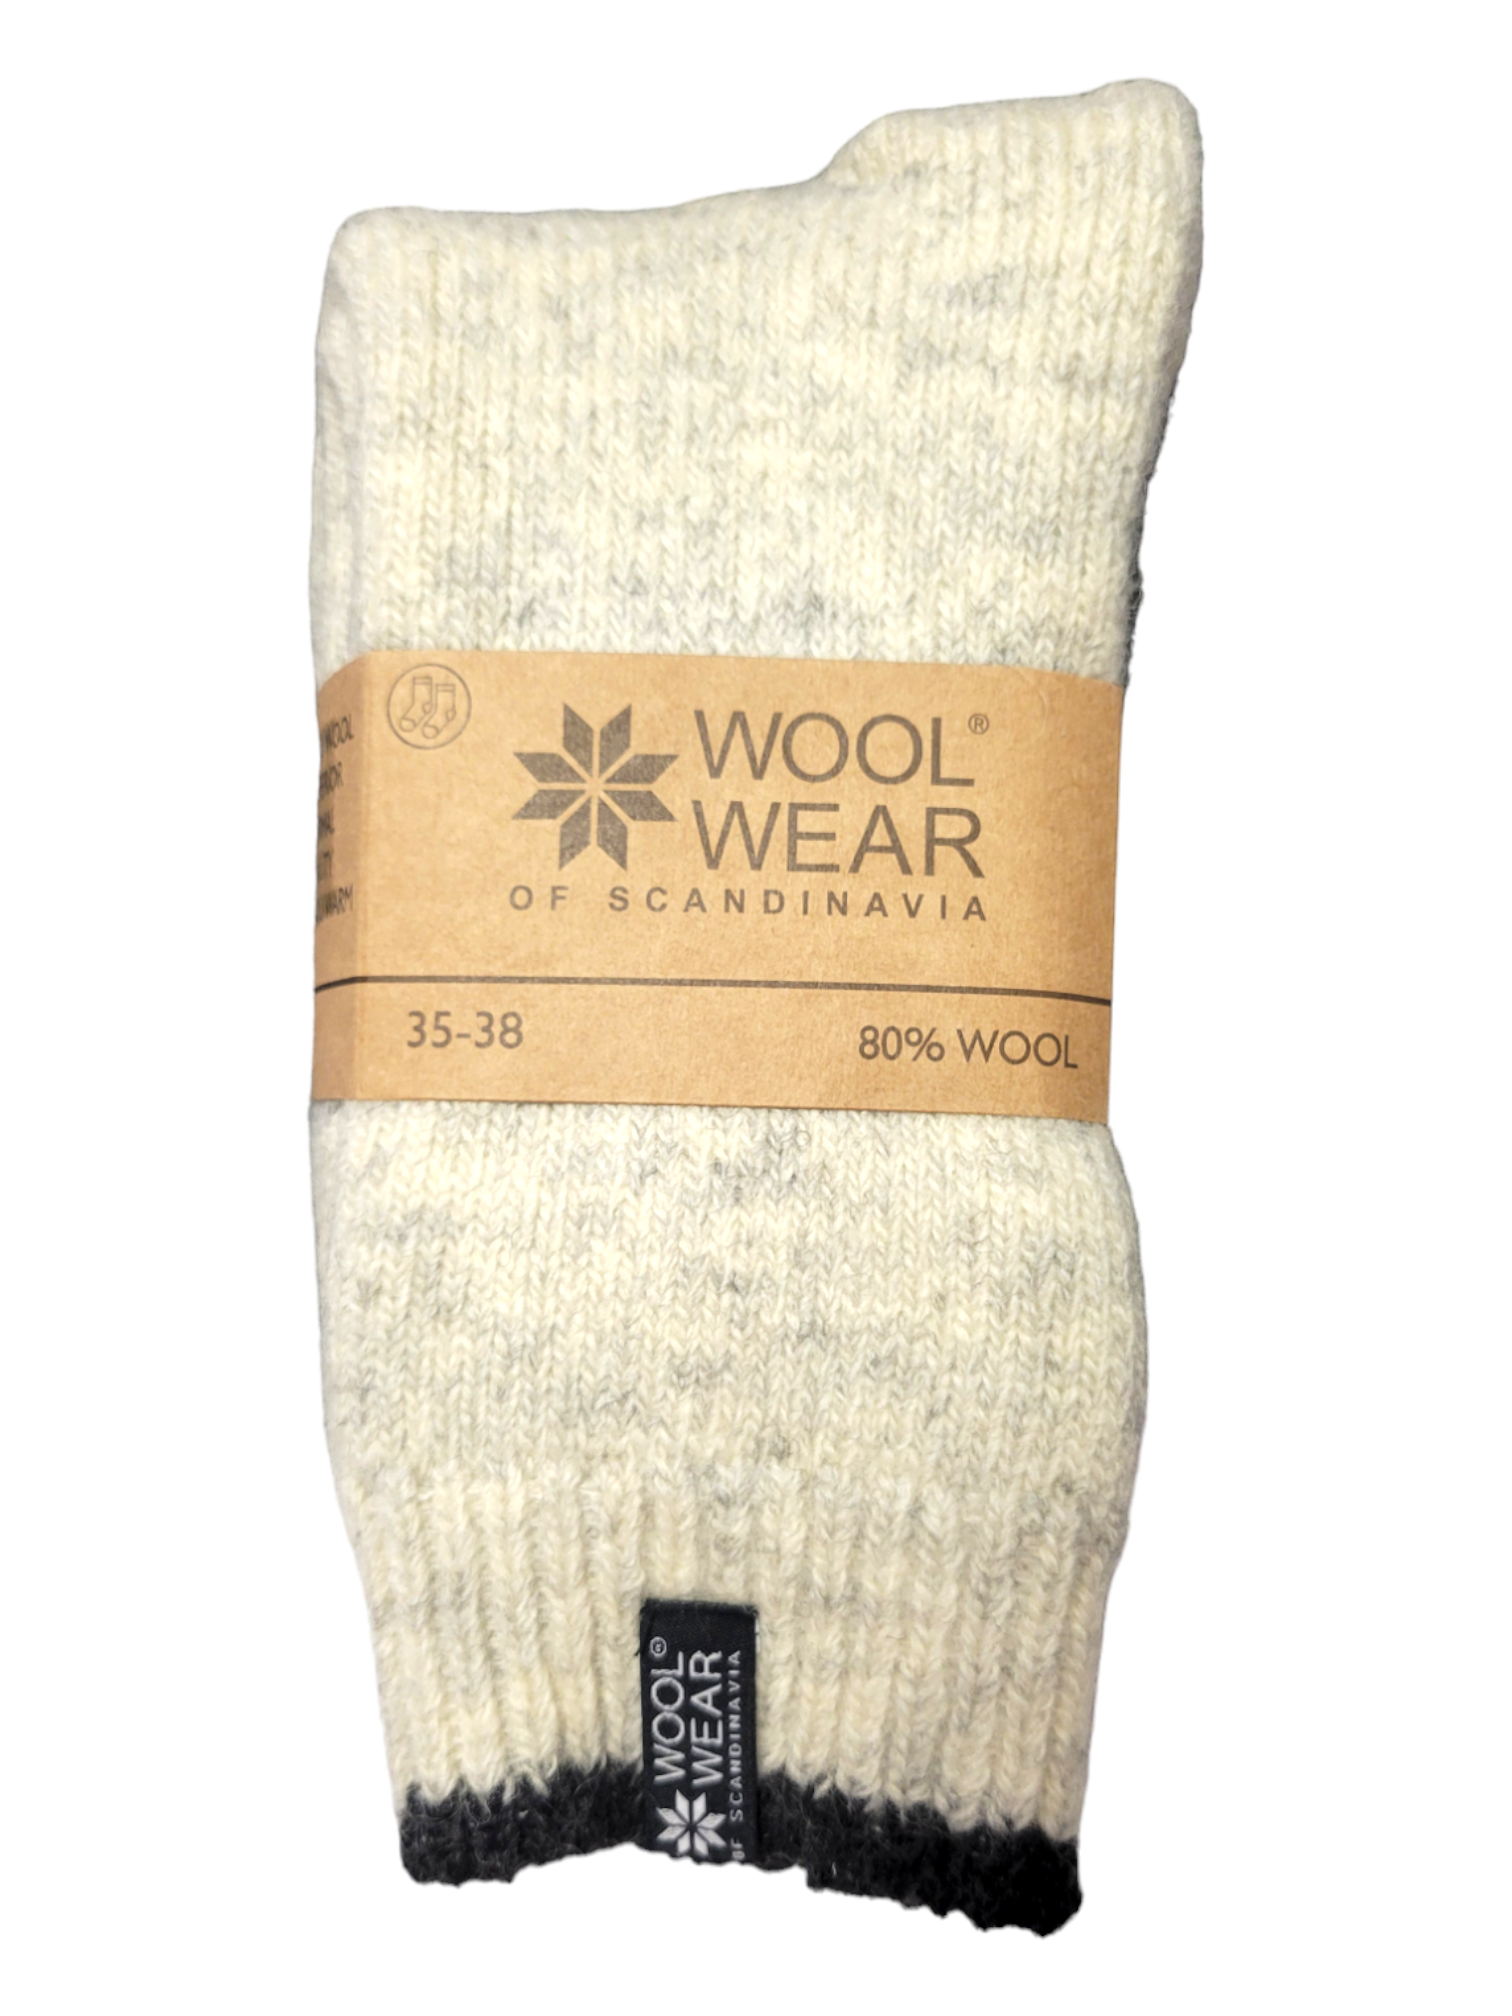 Socks: Wool Wear - Eskimo Natural, 80% Wool